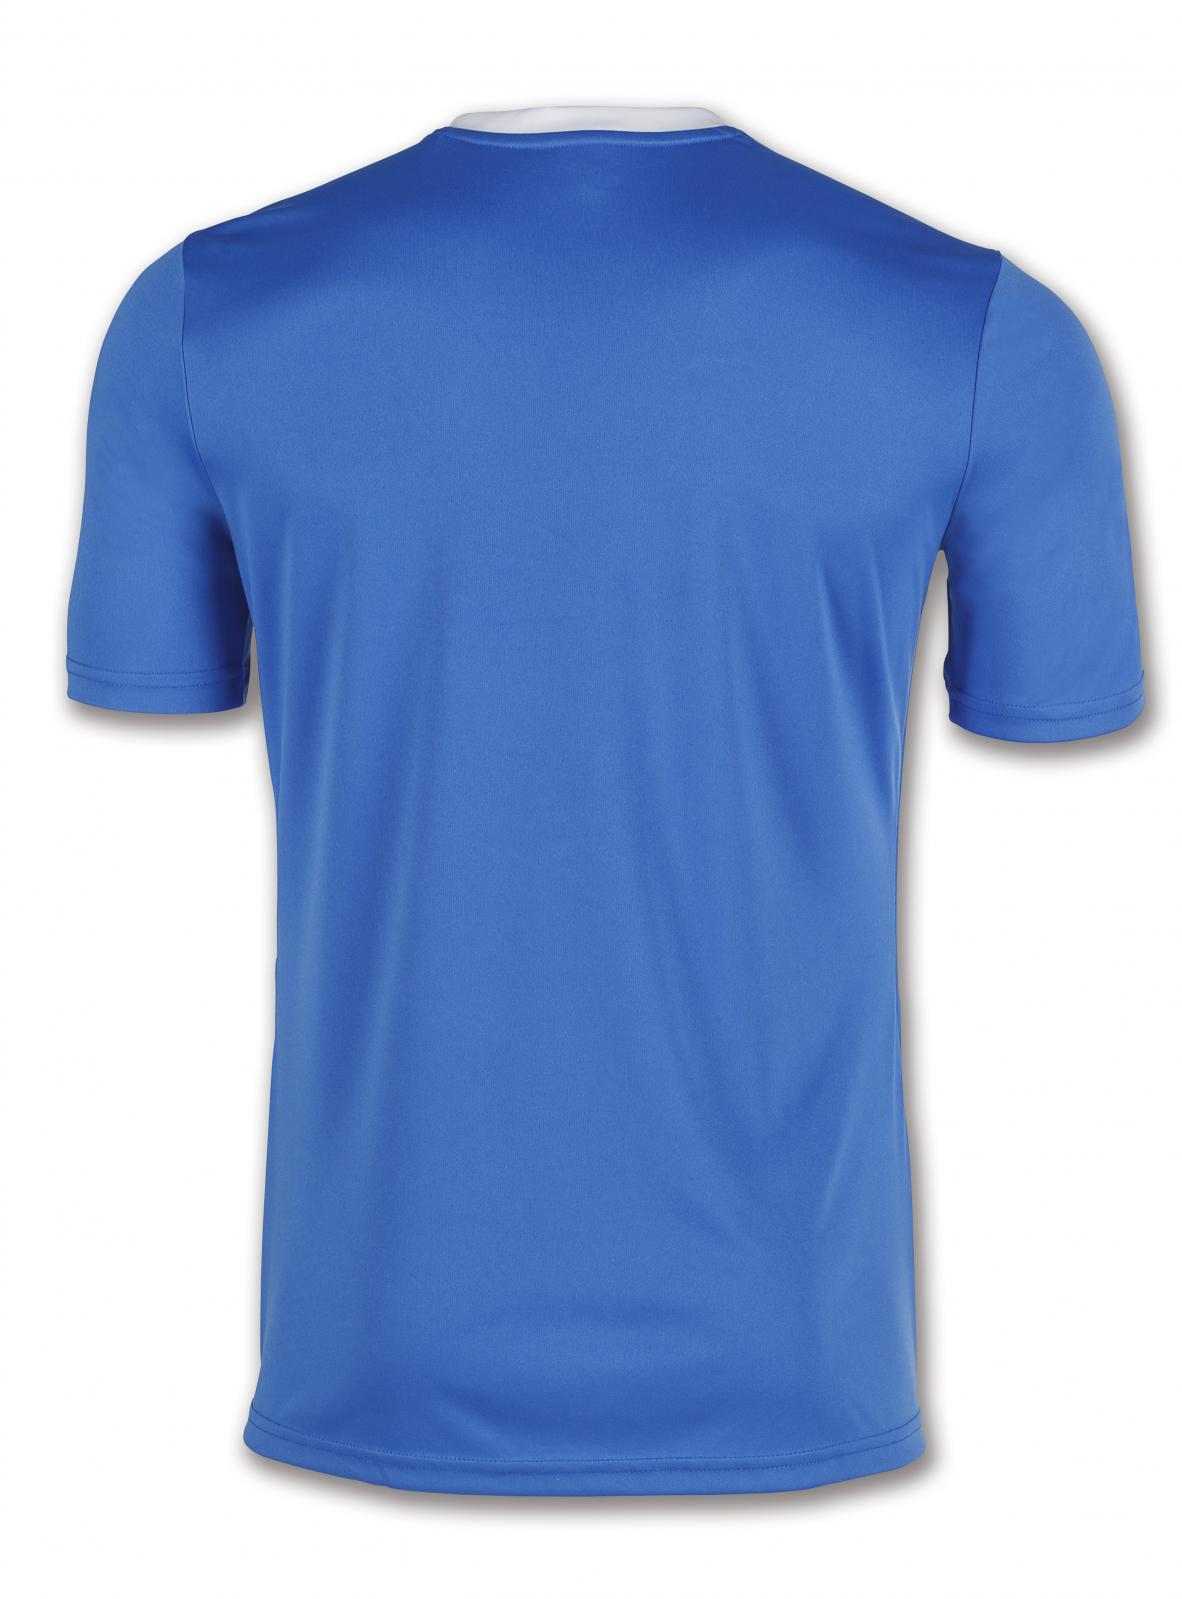 Camiseta Fútbol JOMA WINNER color Blanco-Azul